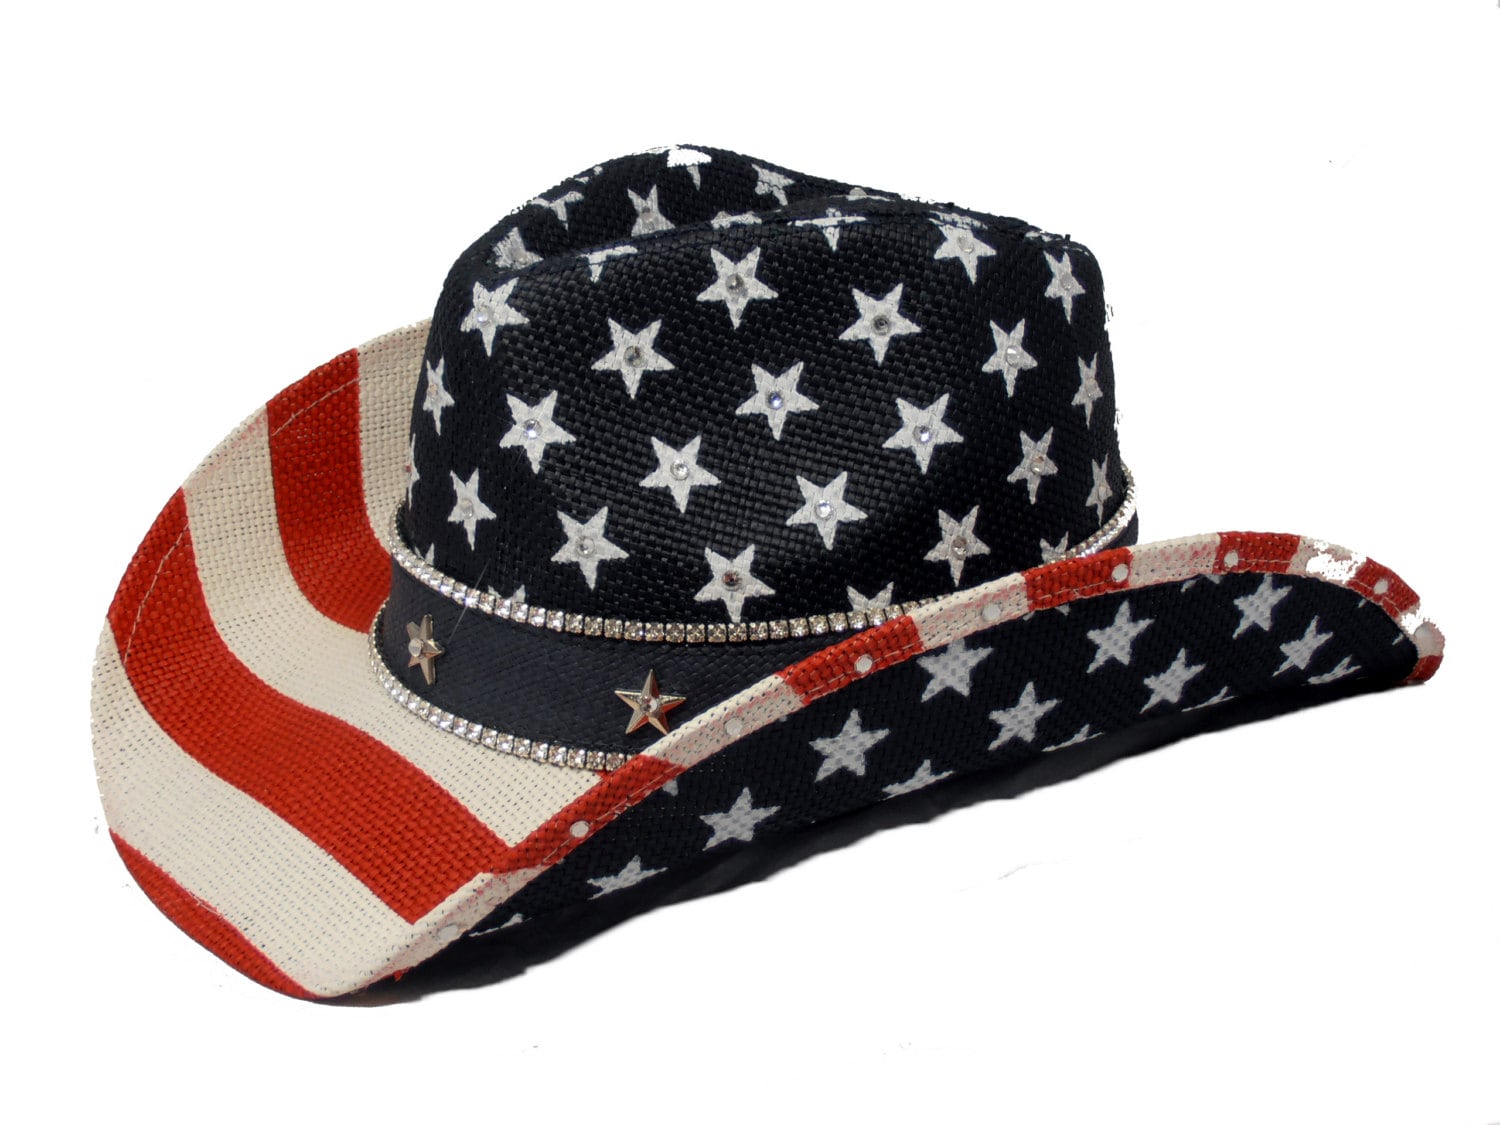 American flag womens cowboy hat by Timetwochange on Etsy